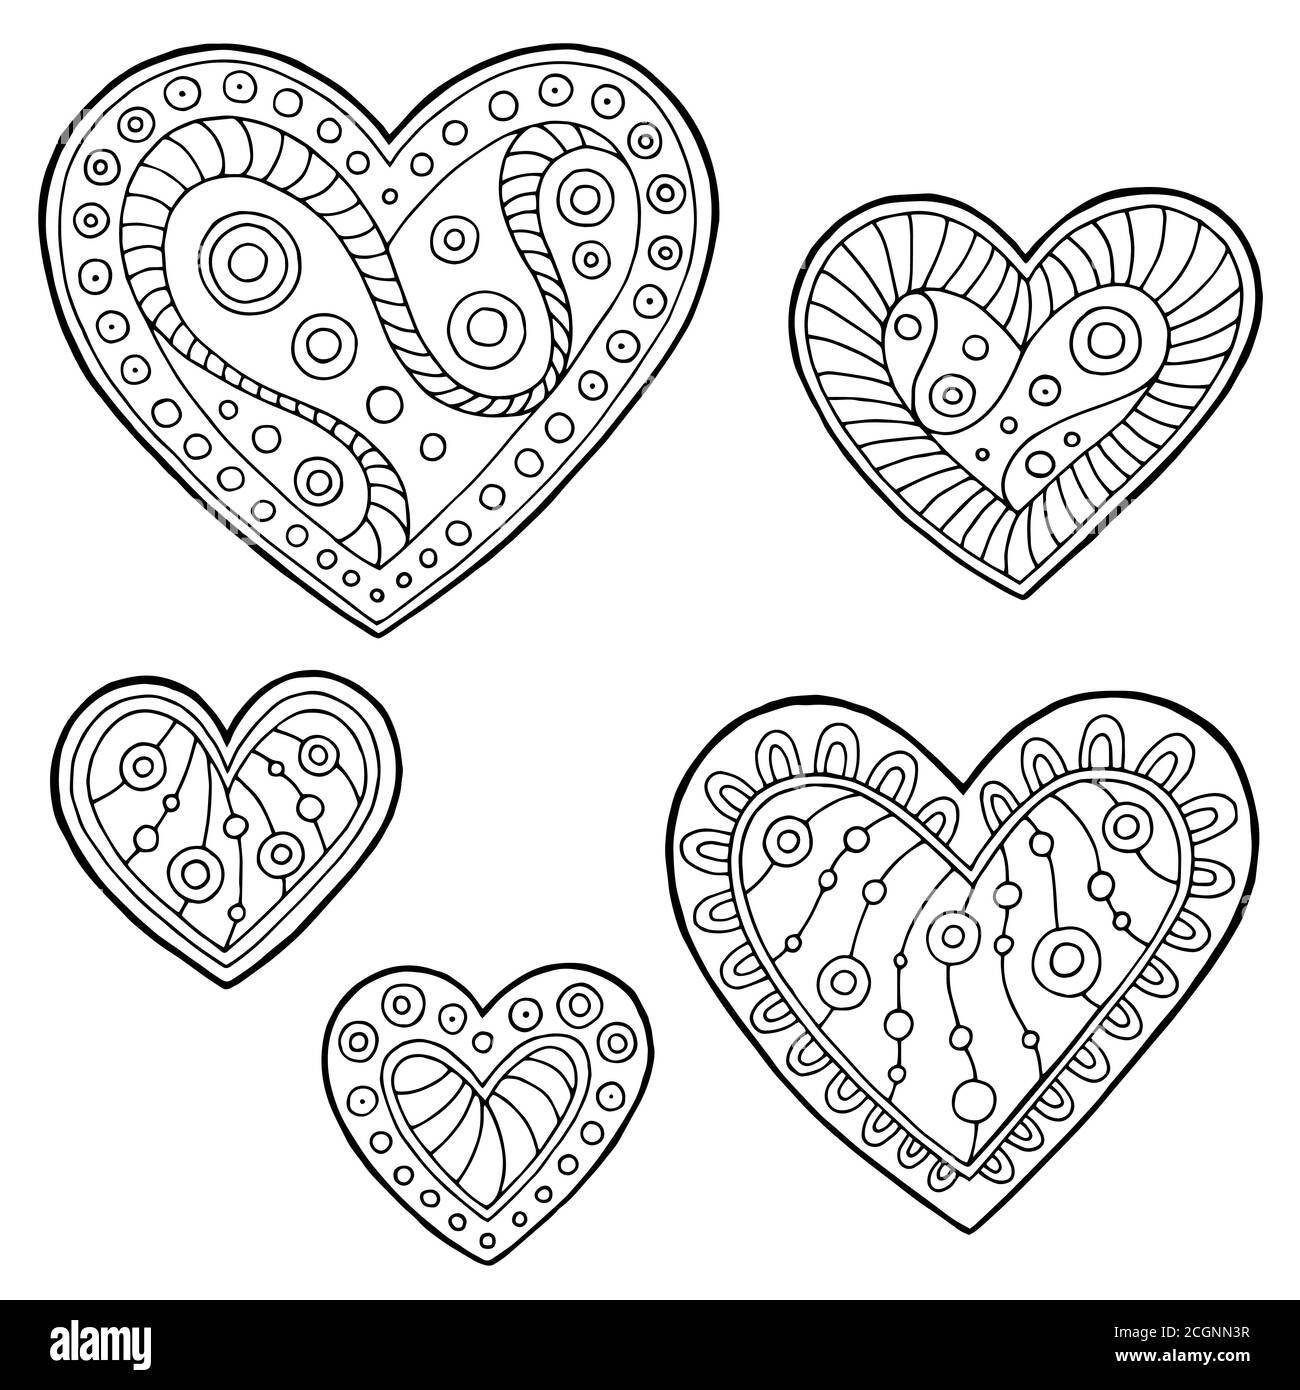 Pattern doodle black white heart graphic set illustration vector Stock Vector